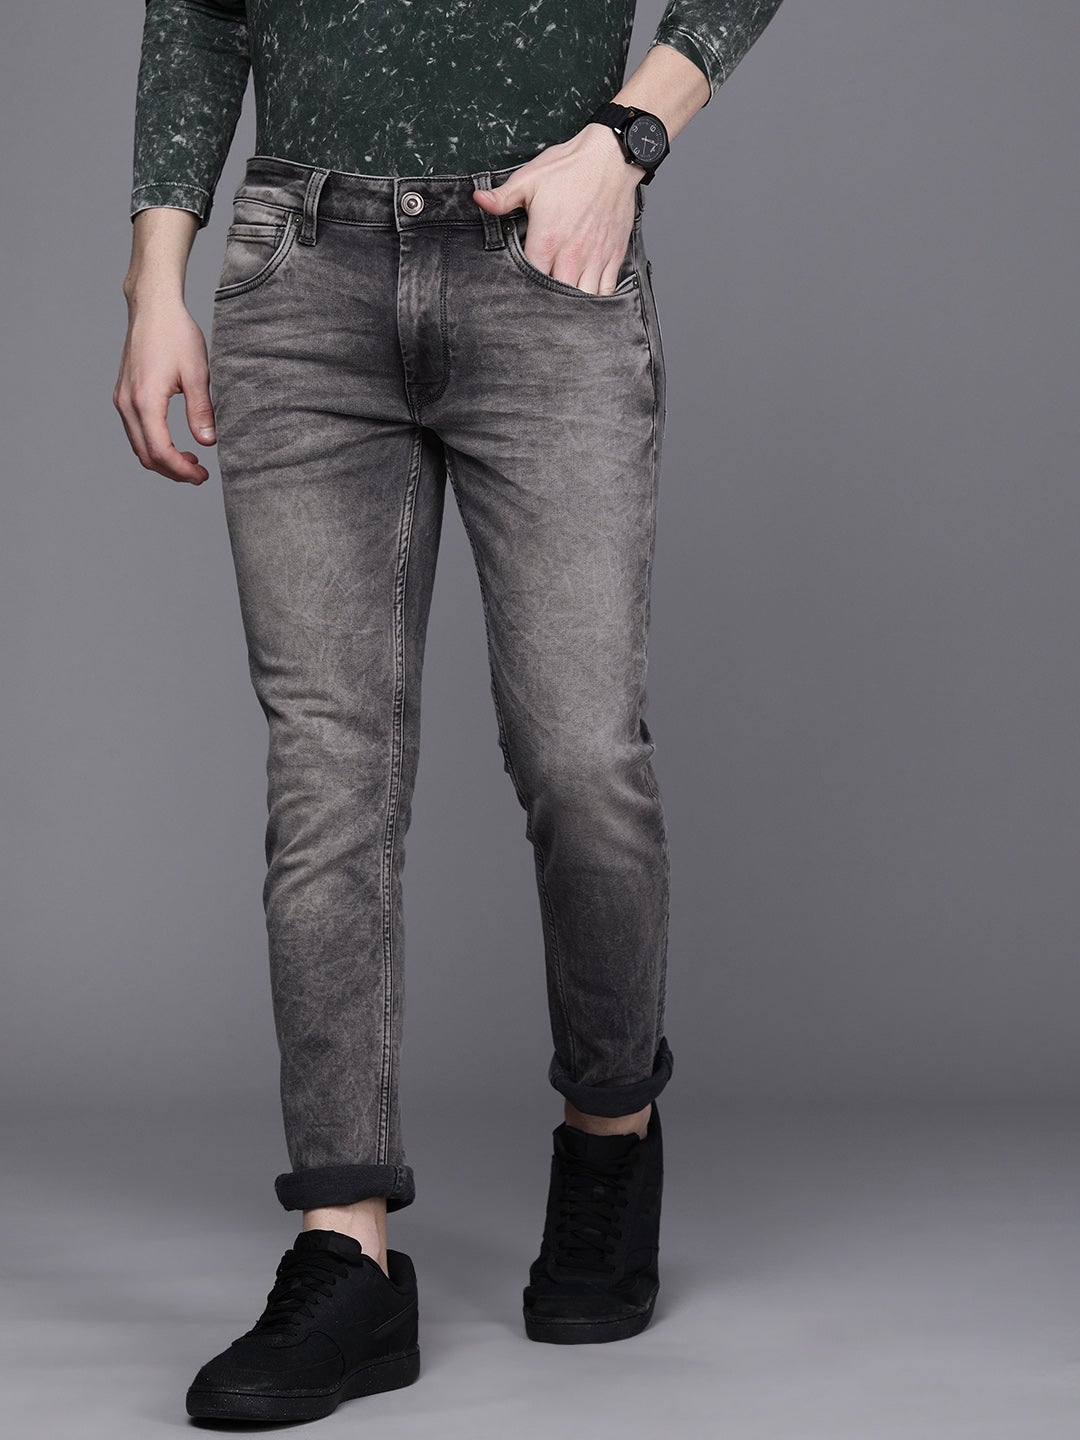 Voi Jeans | Men's Light Grey Track Skinny Stretchable Jeans (VOJN1639)